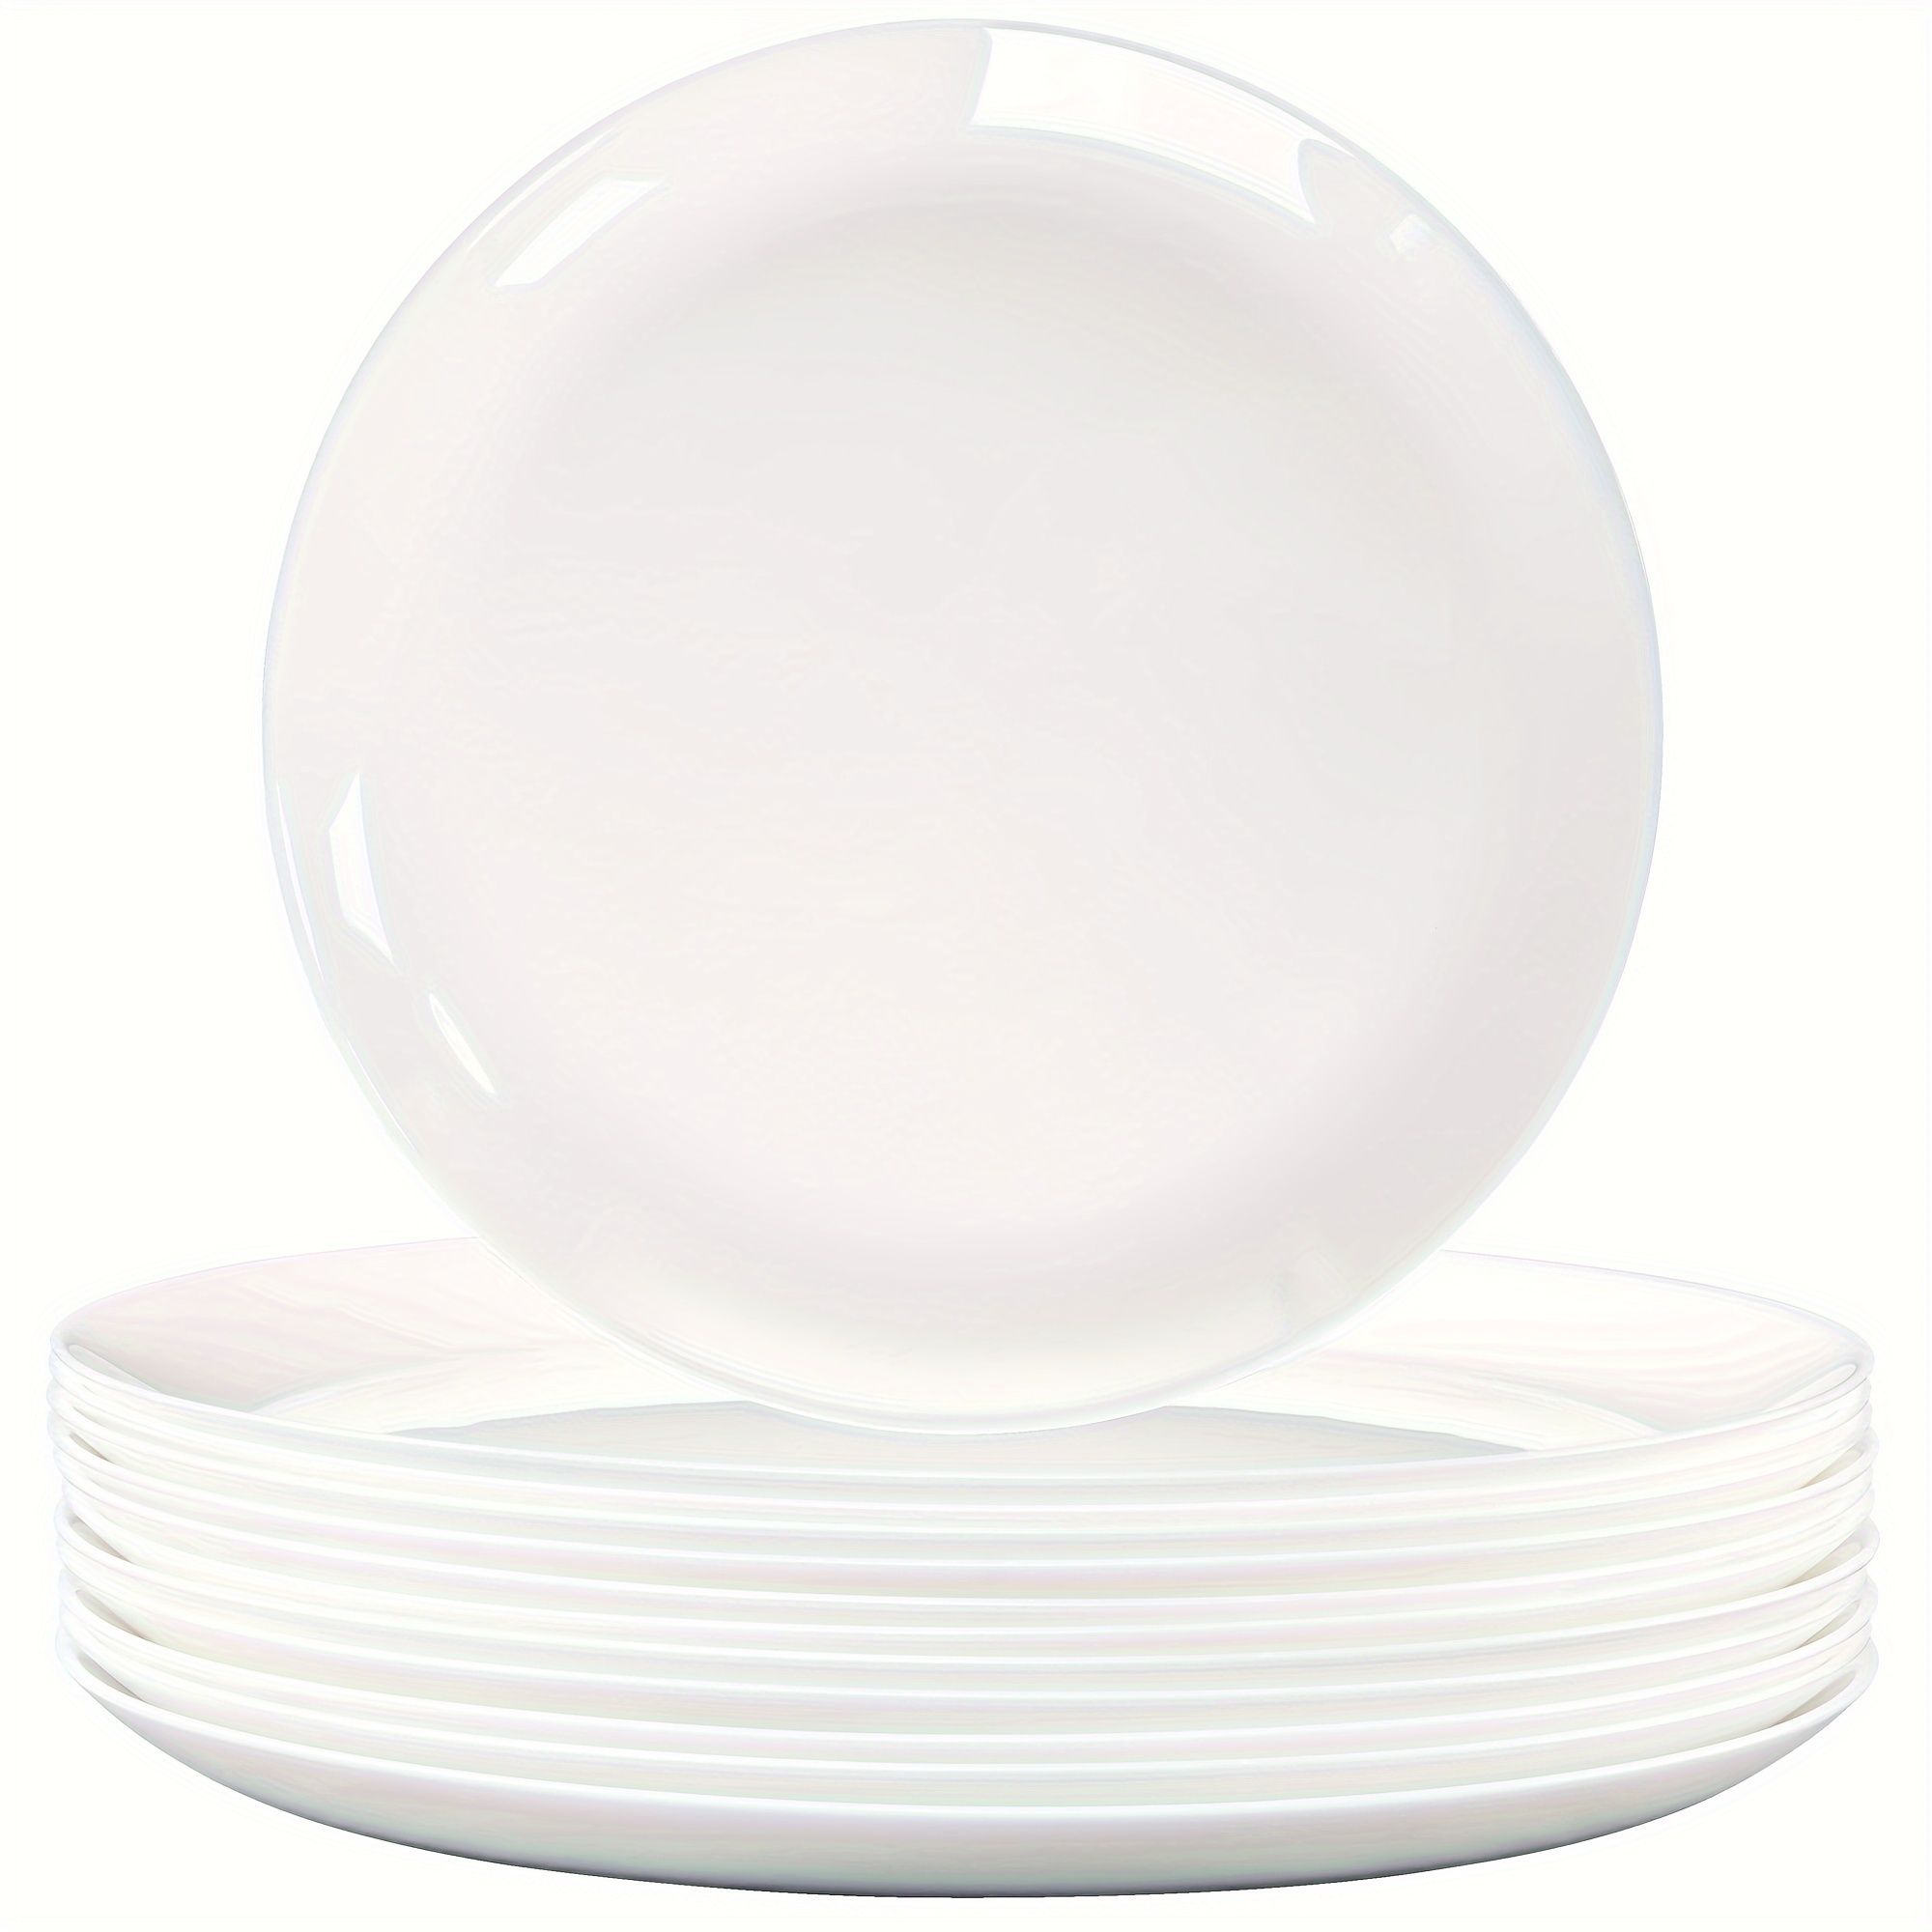 

6/12pcs Dinner Plates Set, Tempered Glass White Plates, 10-1/2-inch Round Dish Set, Perfect For Home Dinner Wedding Restaurant